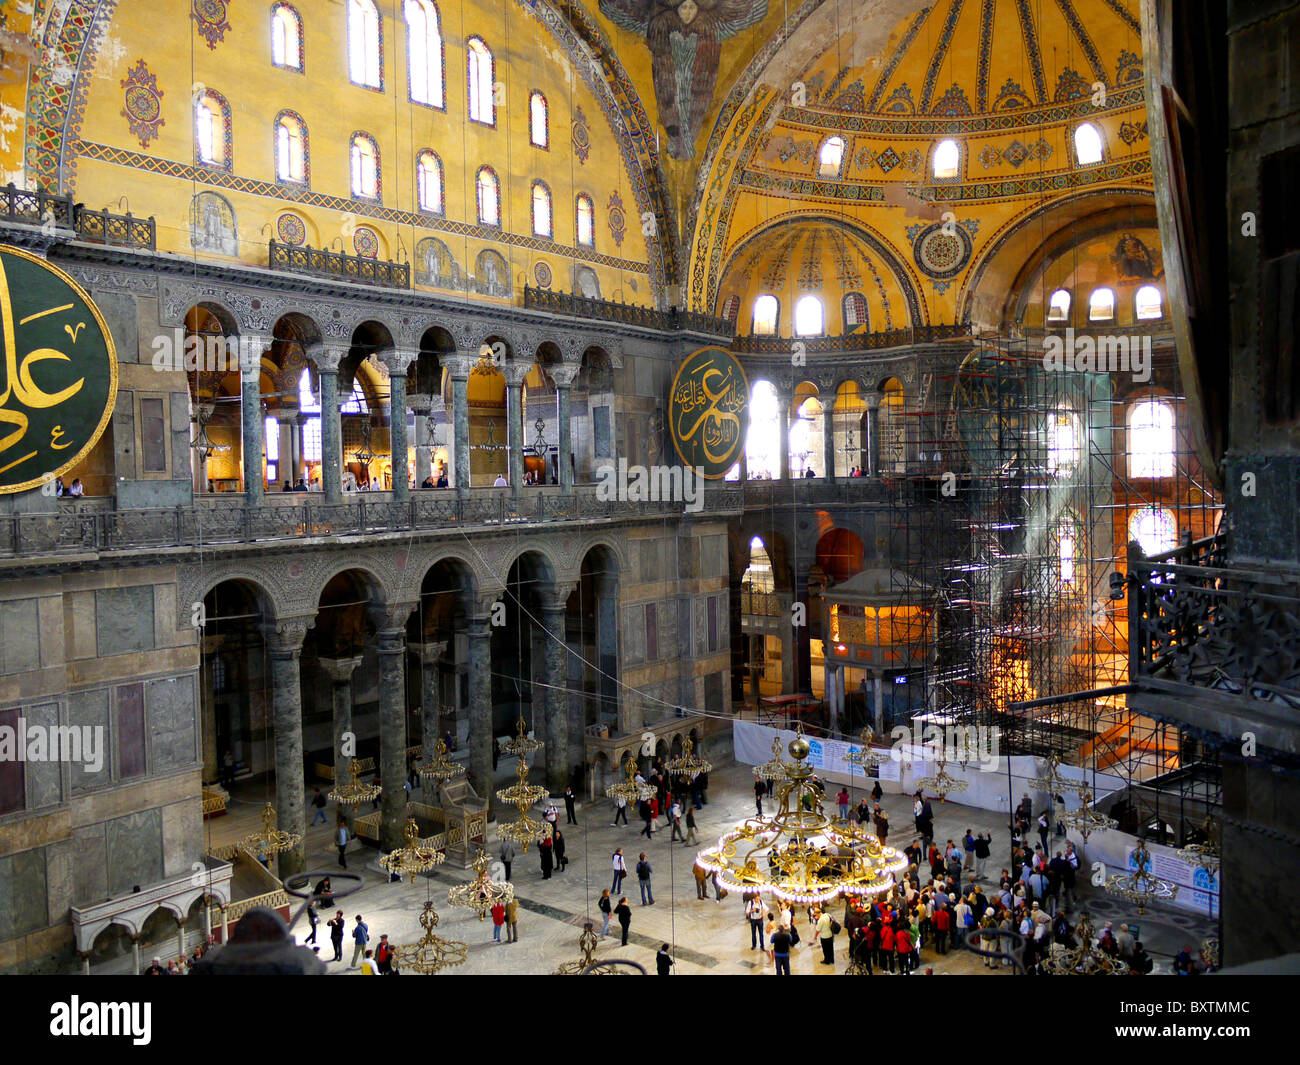 Istanbul Interior Of The Dome Over The Hagia Sophia Museum Stock Photo